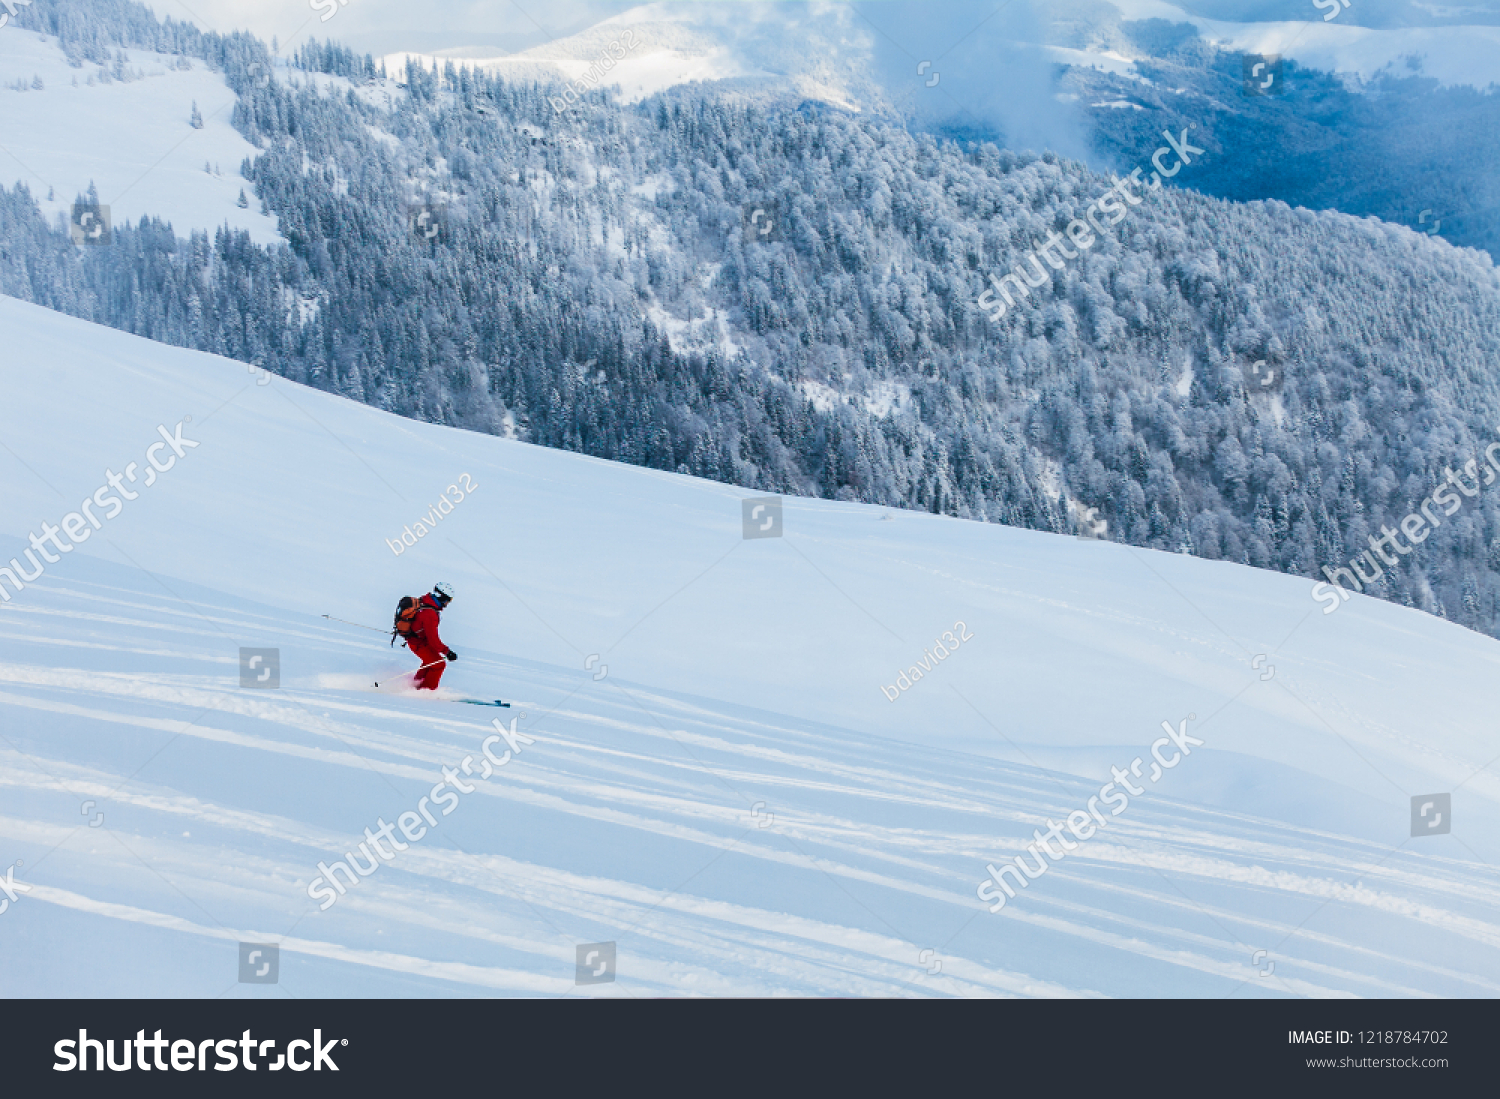 Skier in beautiful resort #1218784702